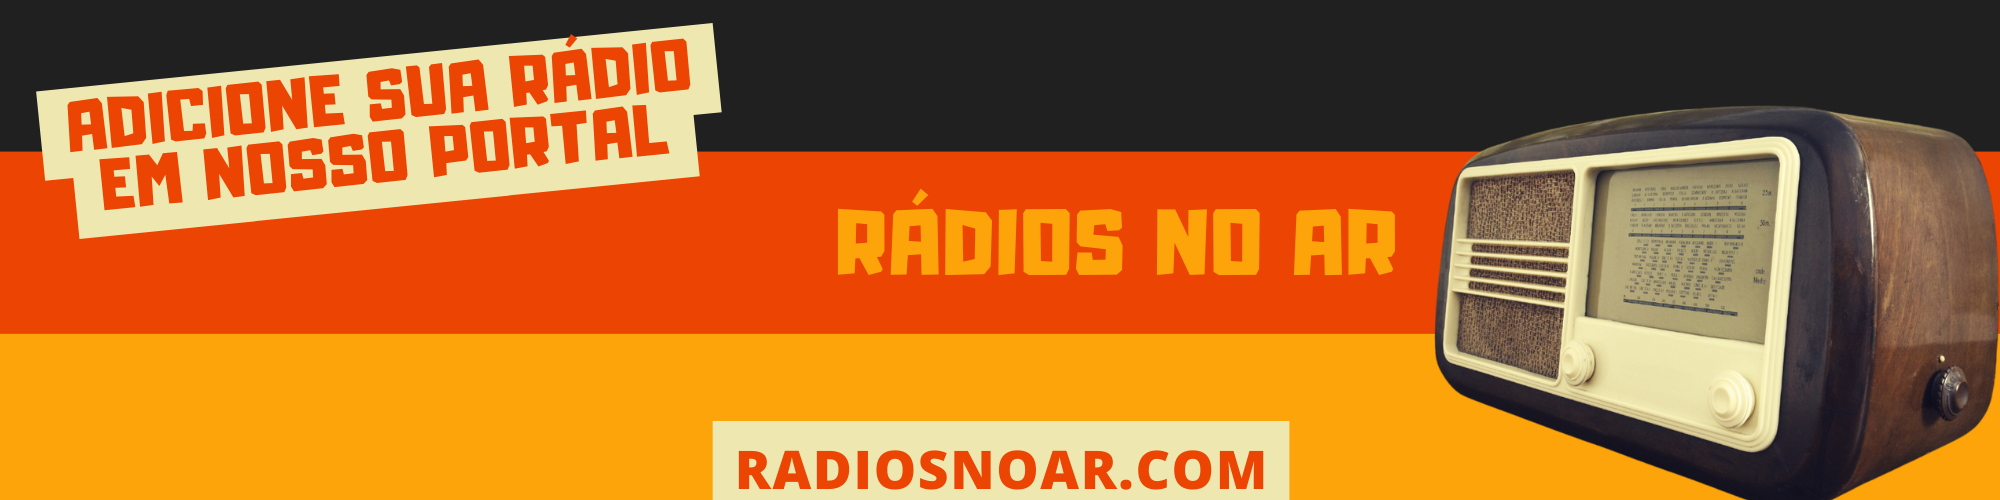 radios no ar (2000 x 500 px)